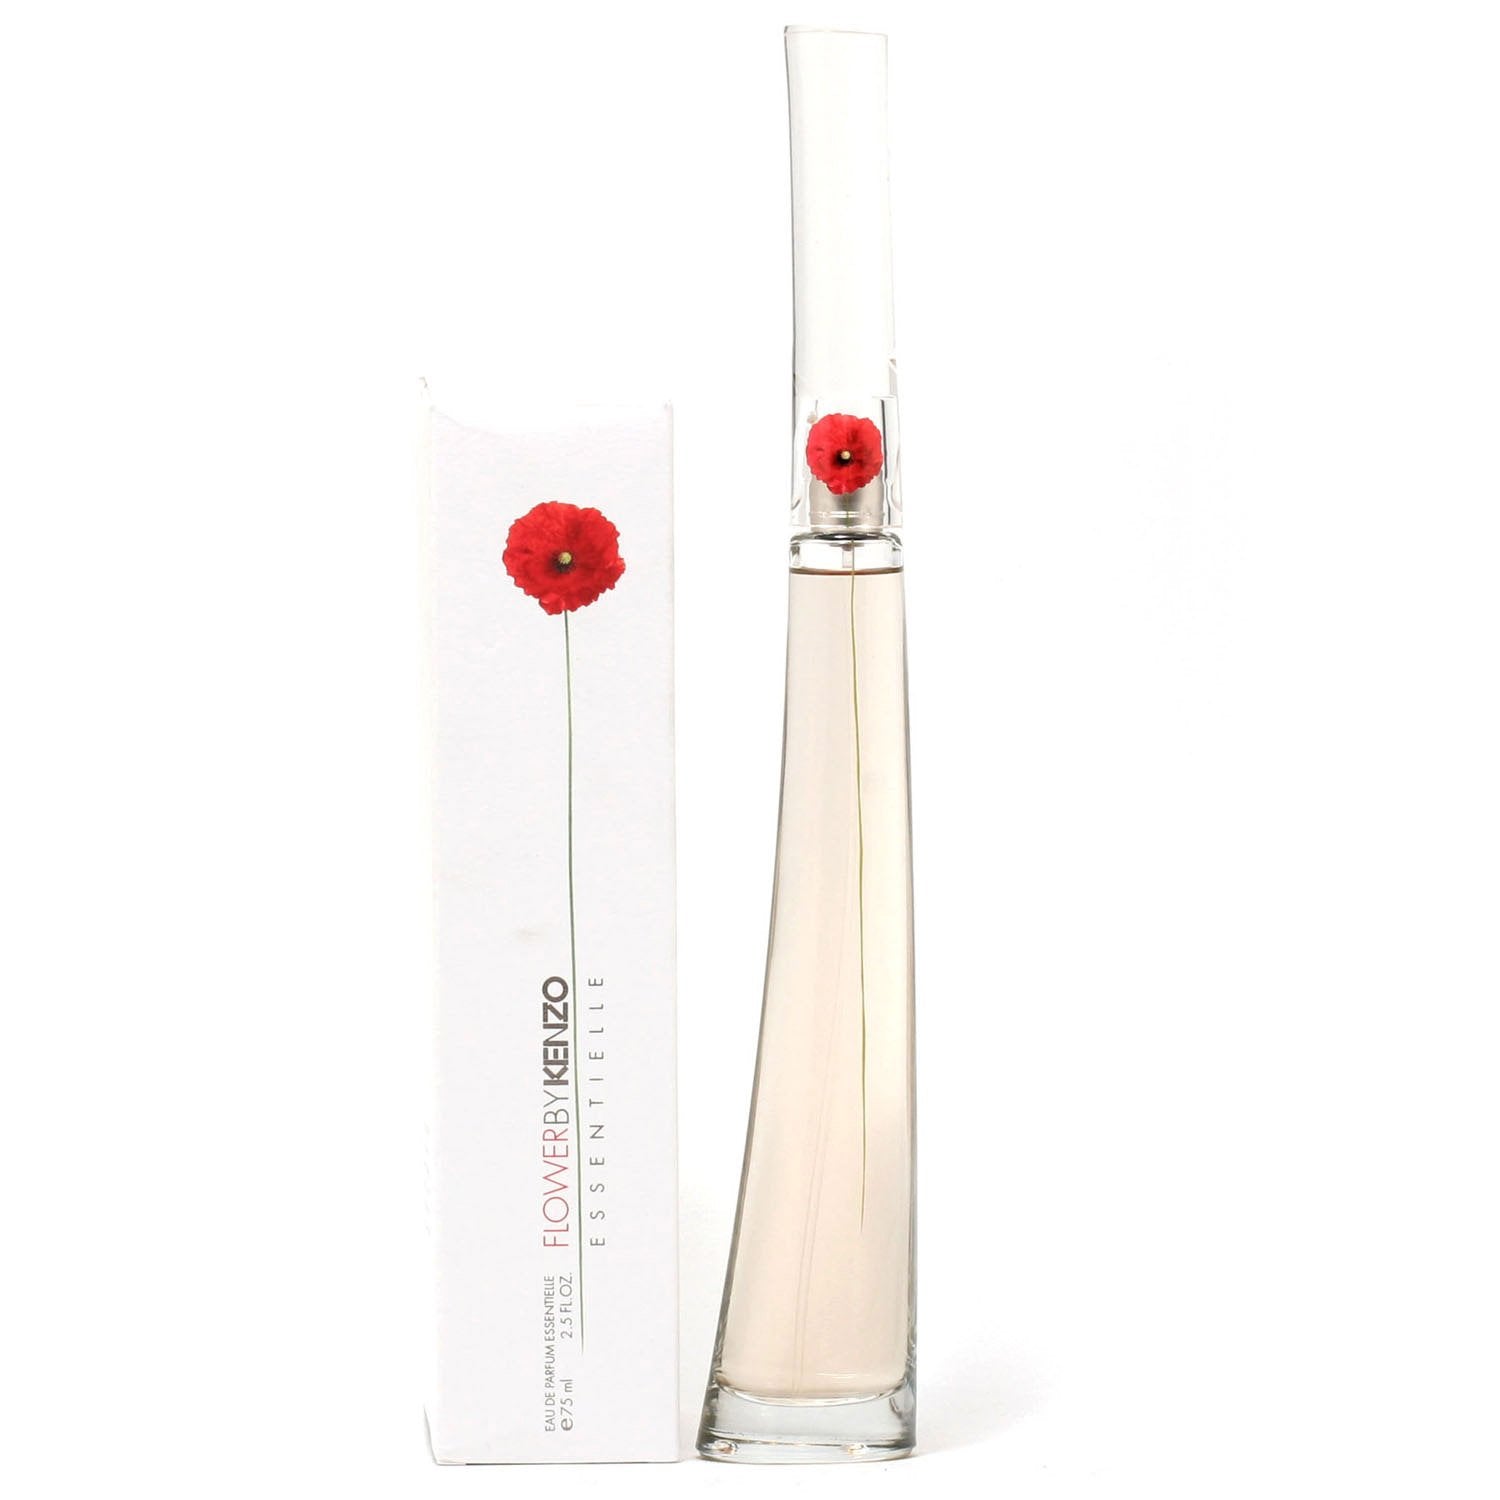 Perfume - KENZO FLOWER ESSENTIELLE FOR WOMEN - EAU DE PARFUM SPRAY